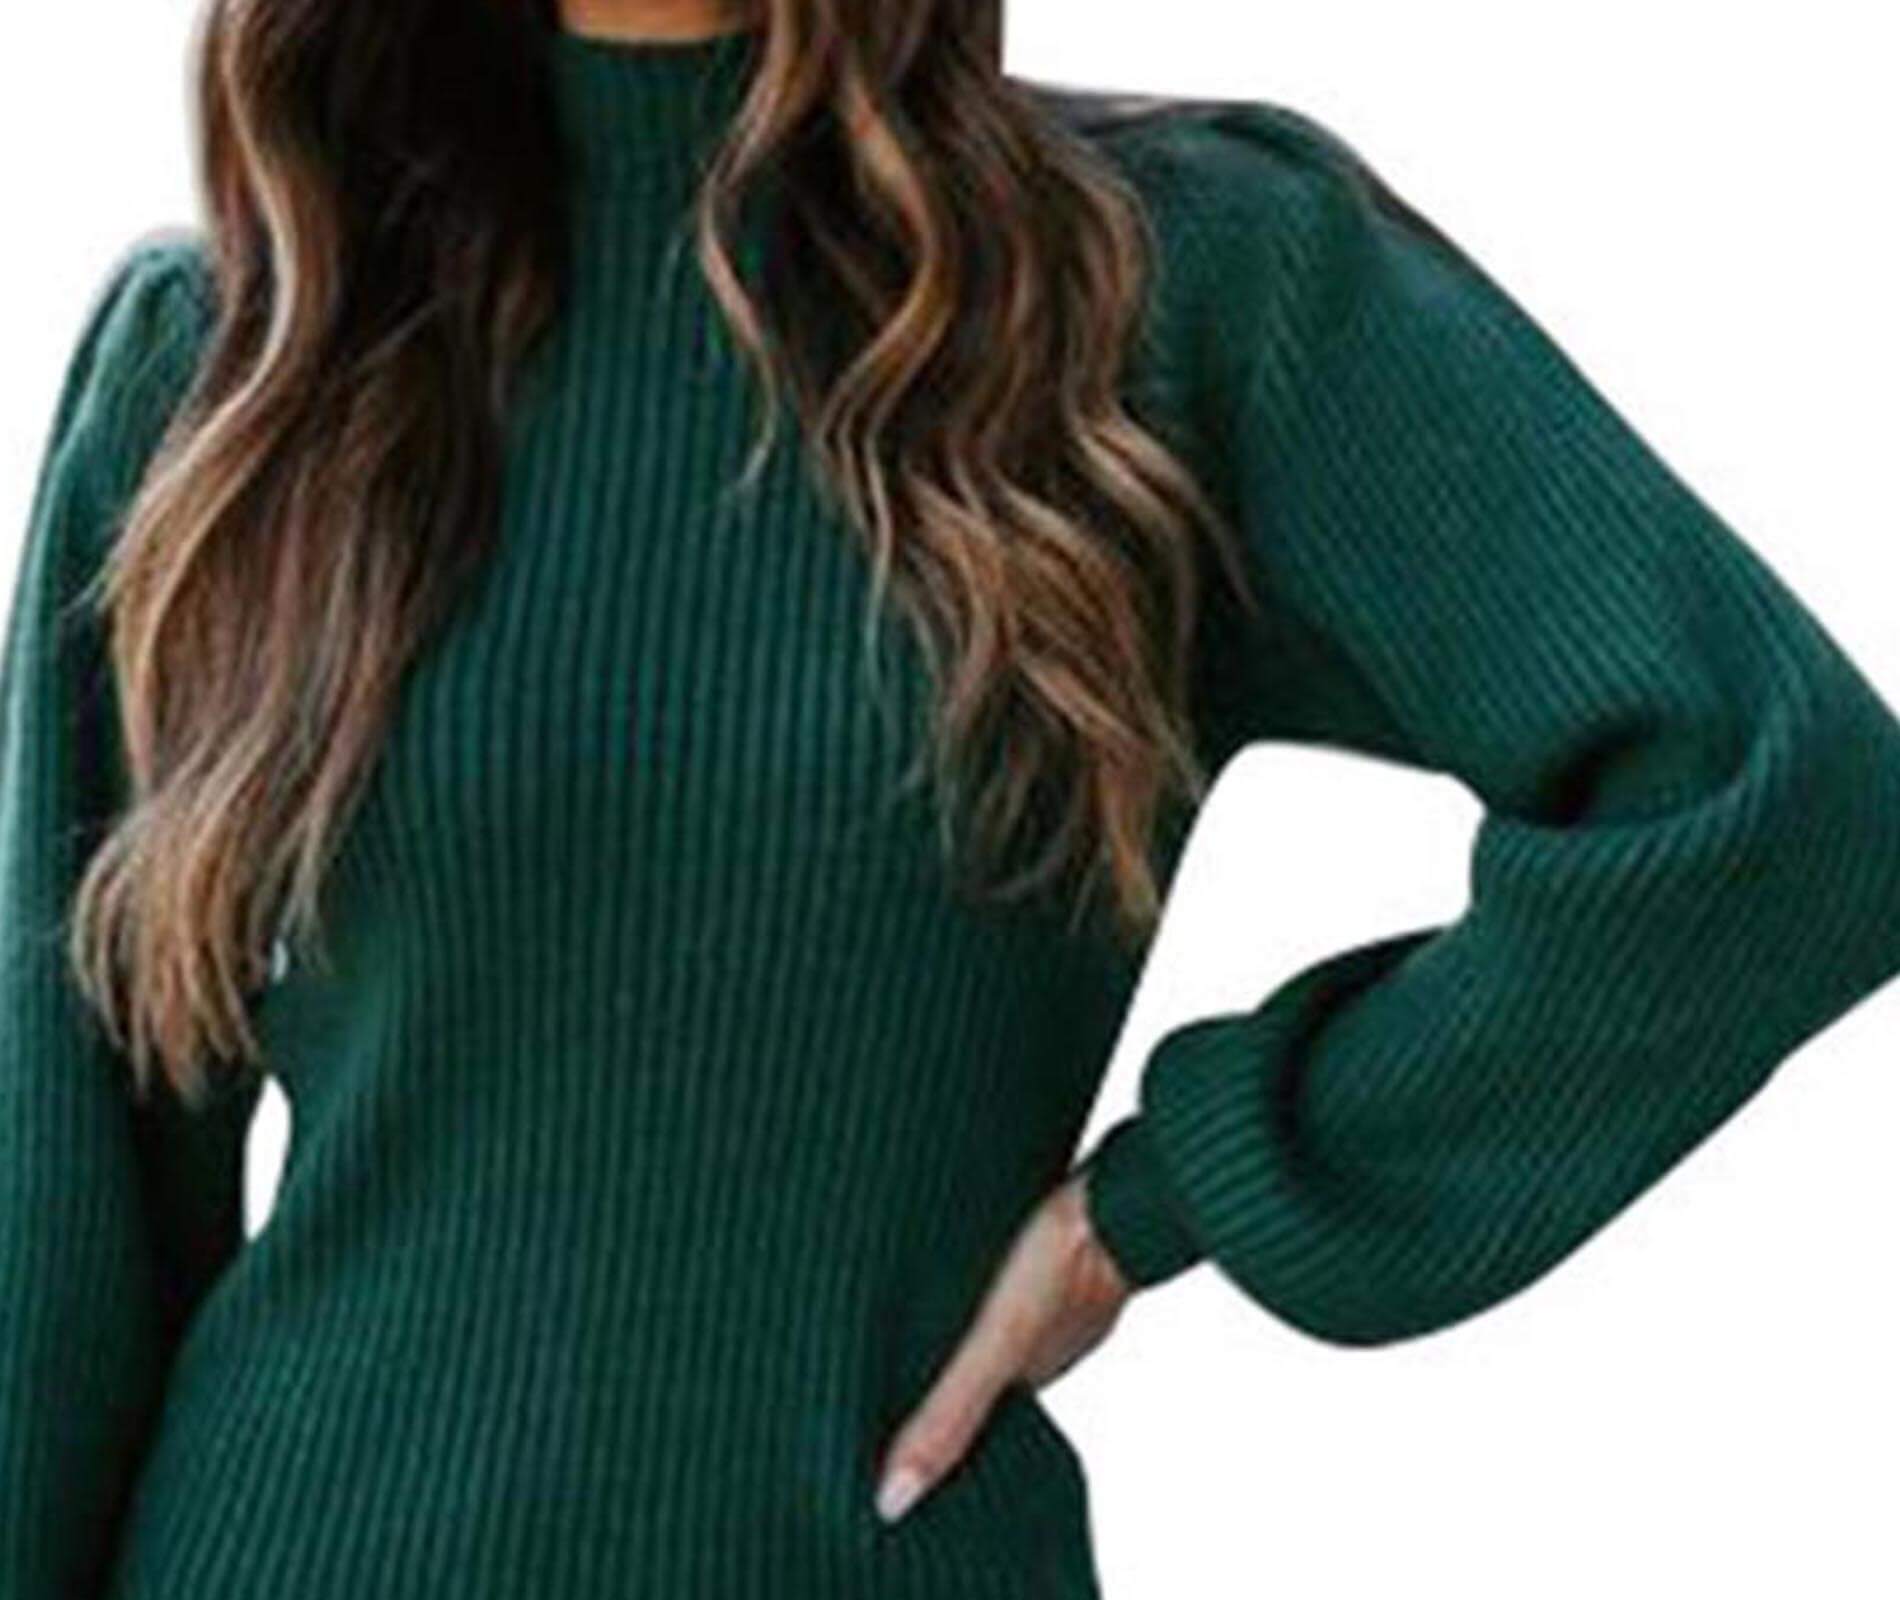  Women's Turtleneck Long Sleeve Knit Pullover Sweater Tops Slim Bodycon Mini Sweater Dress